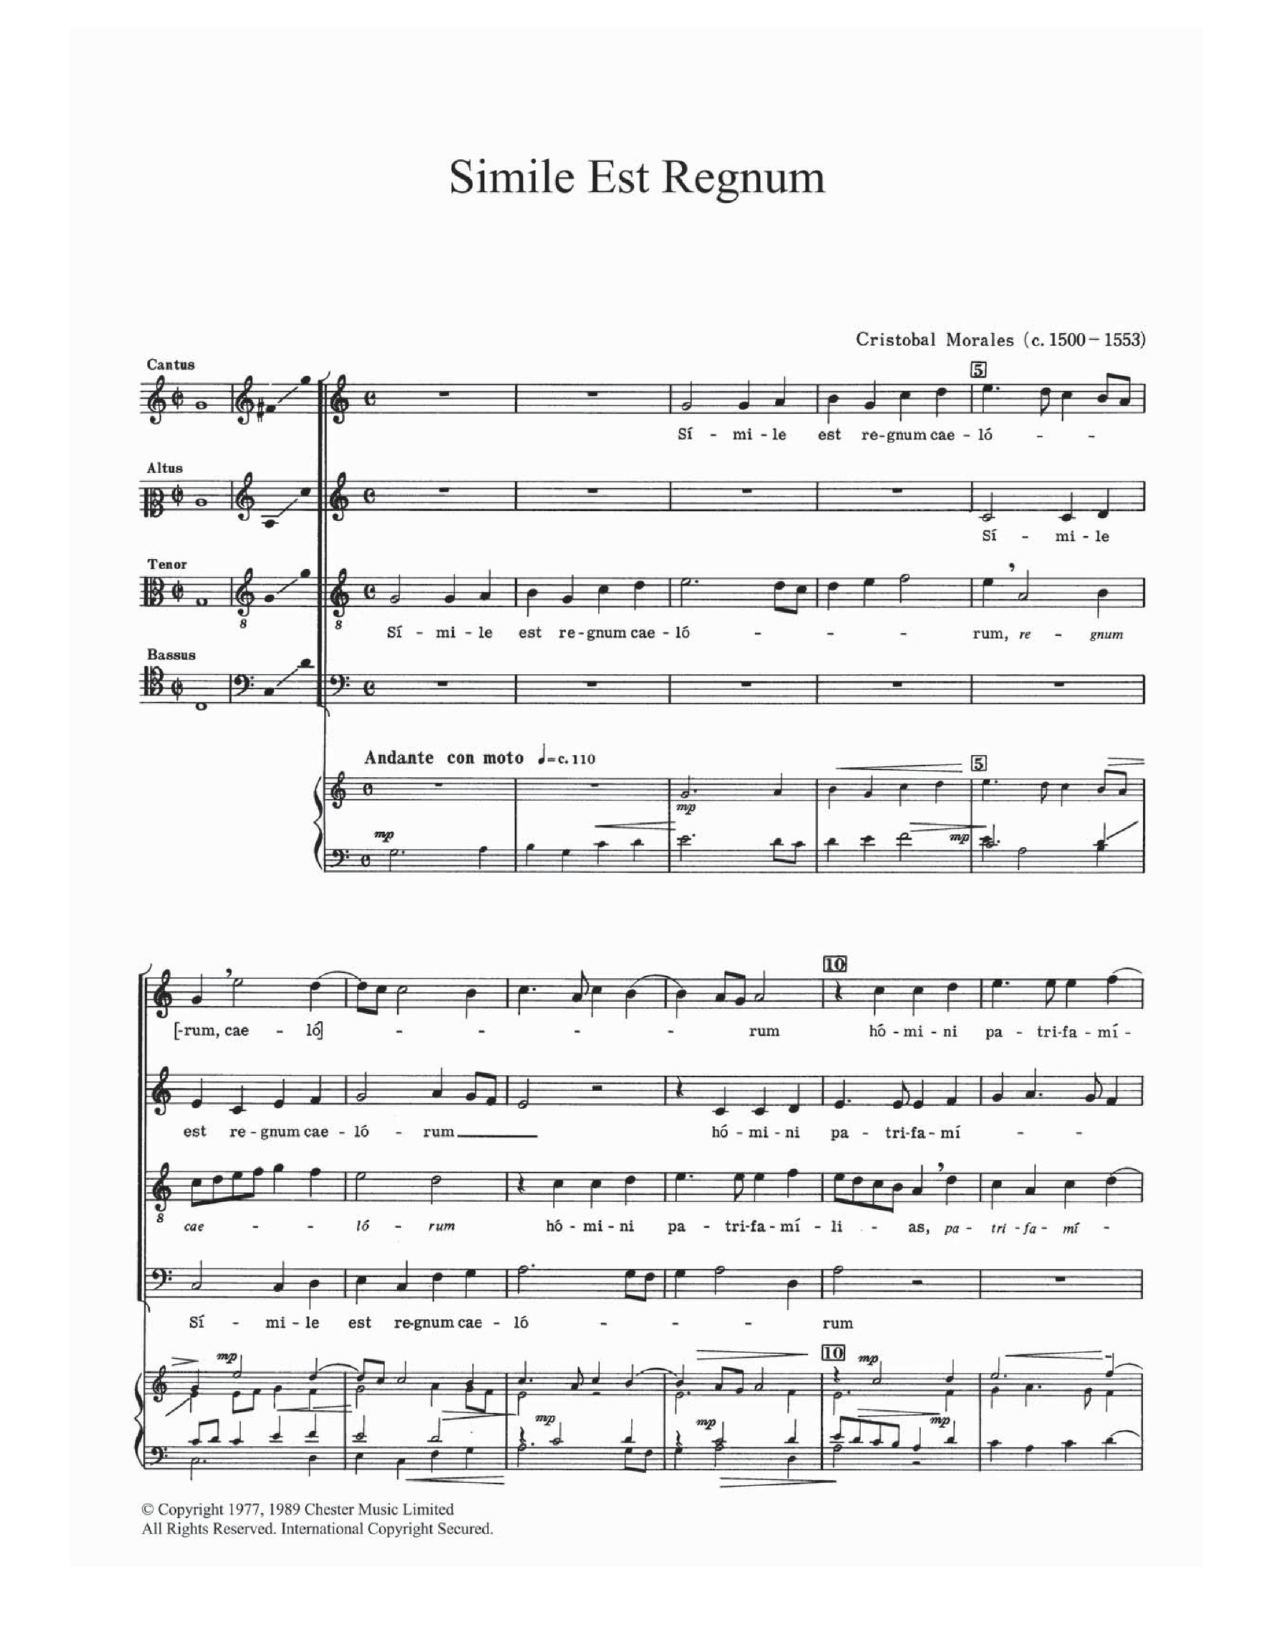 Cristobal de Morales Simile Est Regnum Sheet Music Notes & Chords for SATB - Download or Print PDF